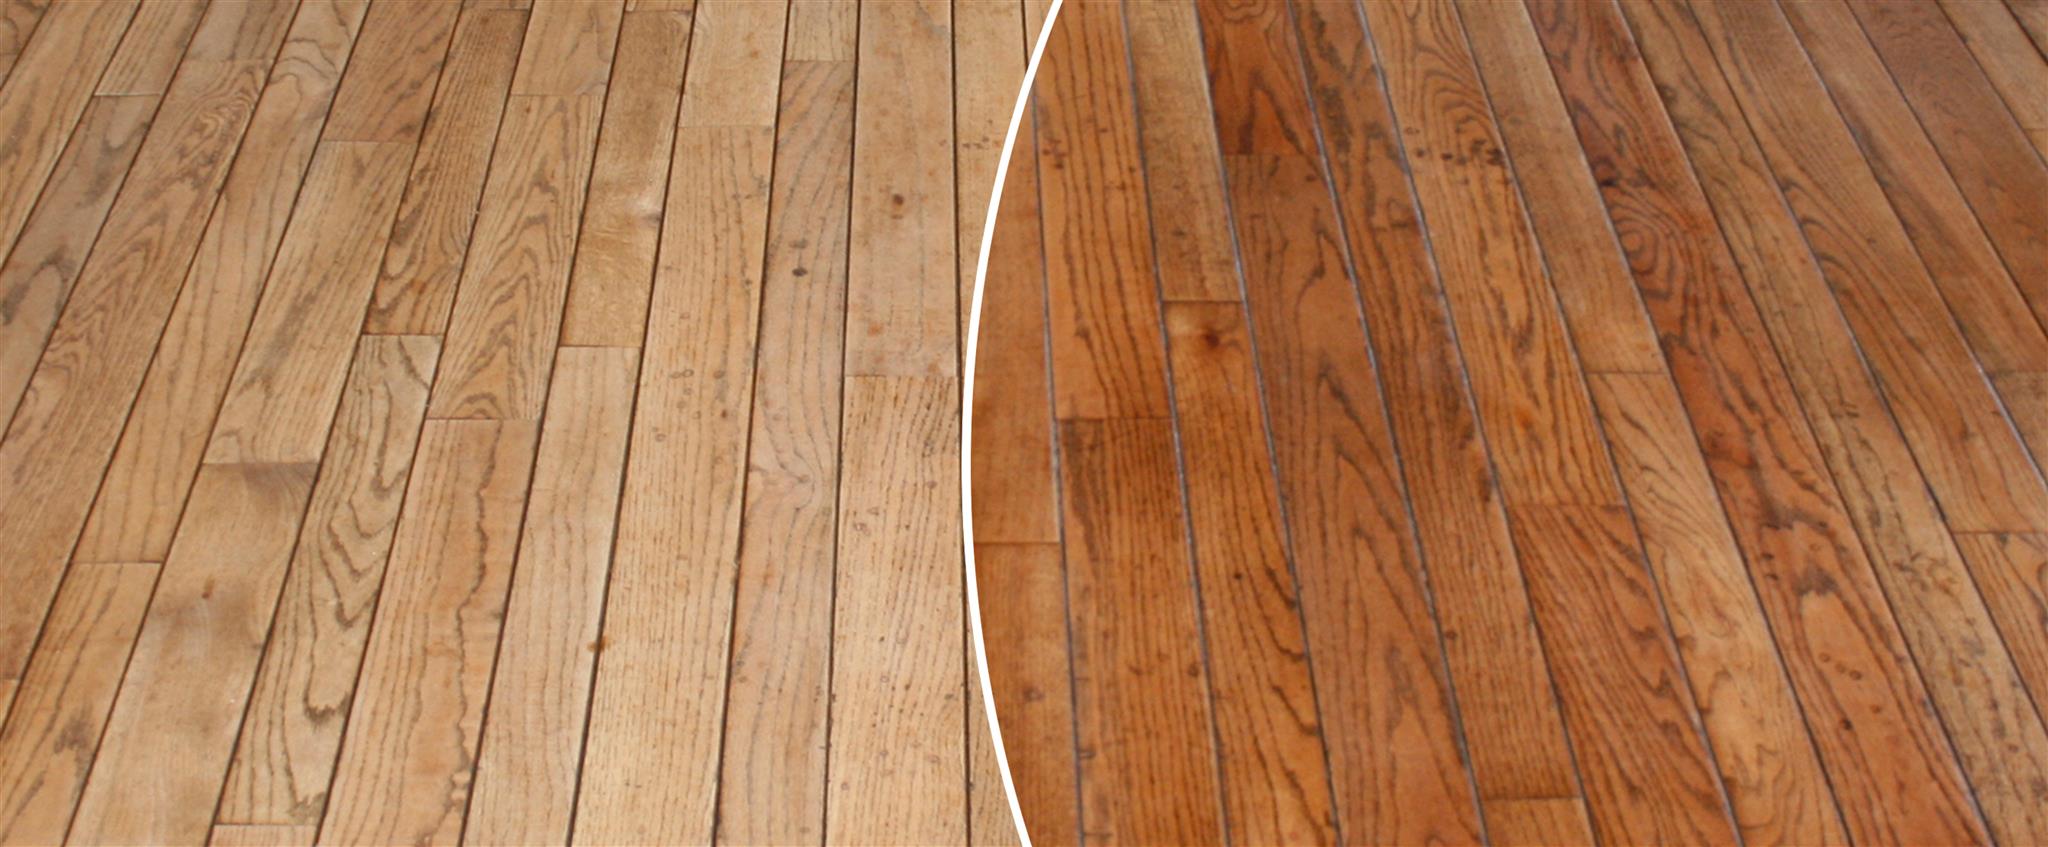 Floor Sanding, How Dusty Is Refinishing Hardwood Floors